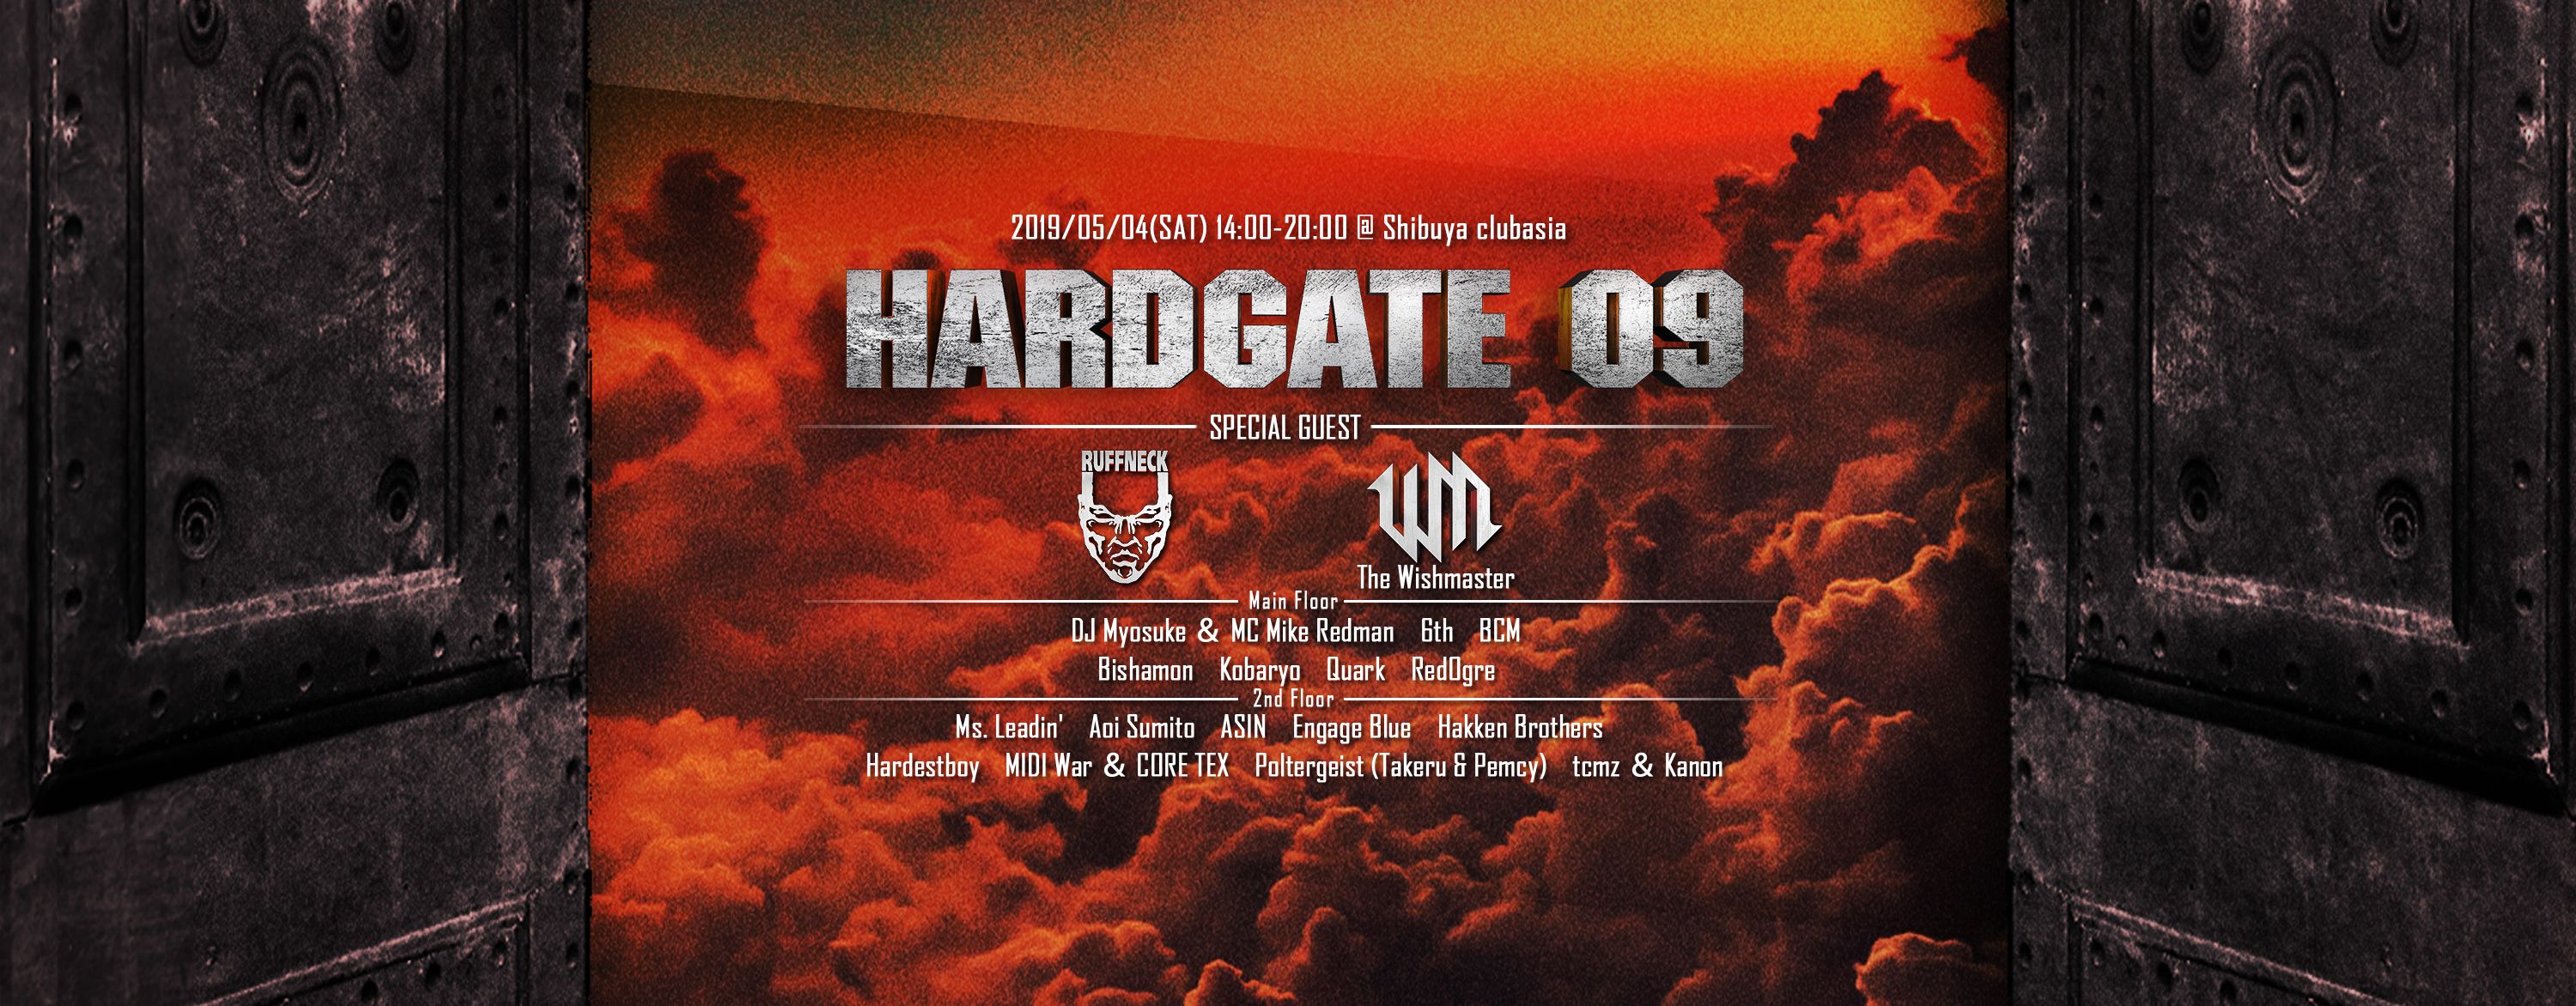 HARDGATE 09